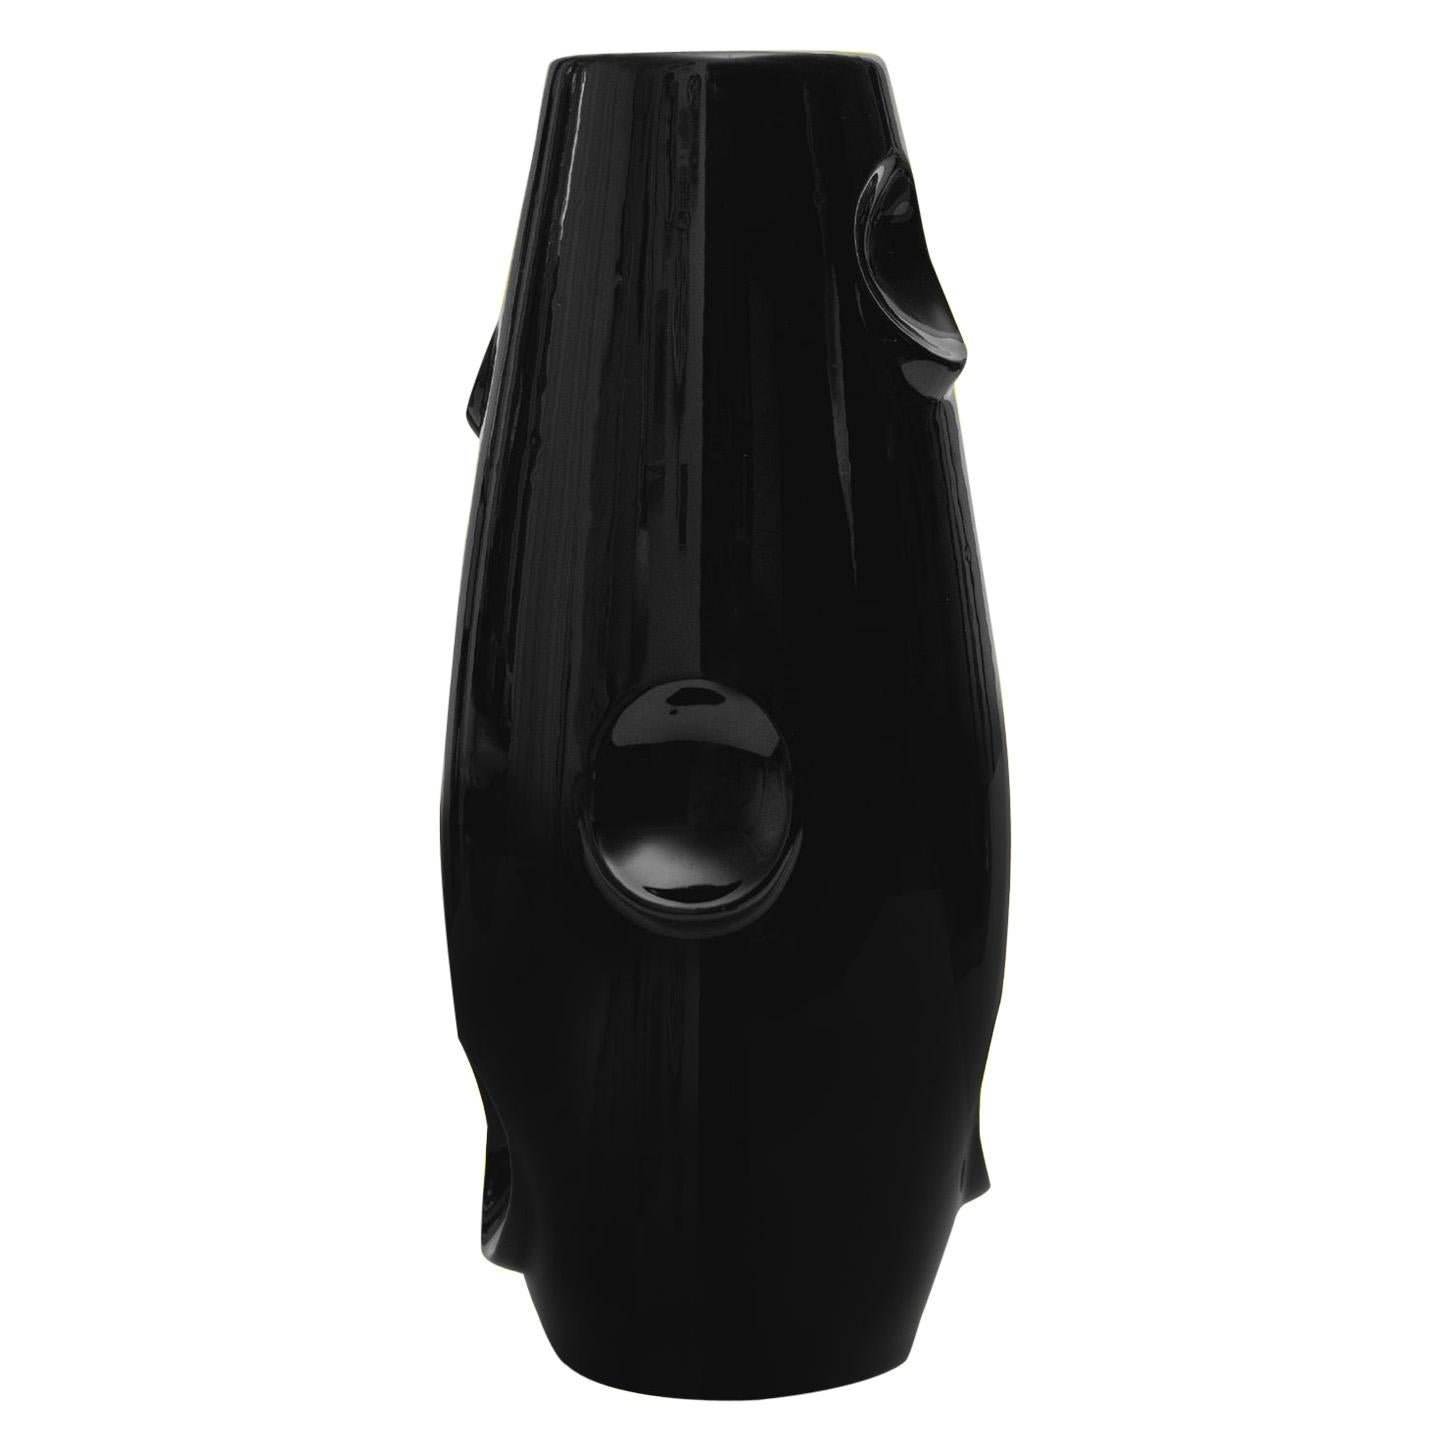 OKO Black Ceramic Vase by Malwina Konopacka